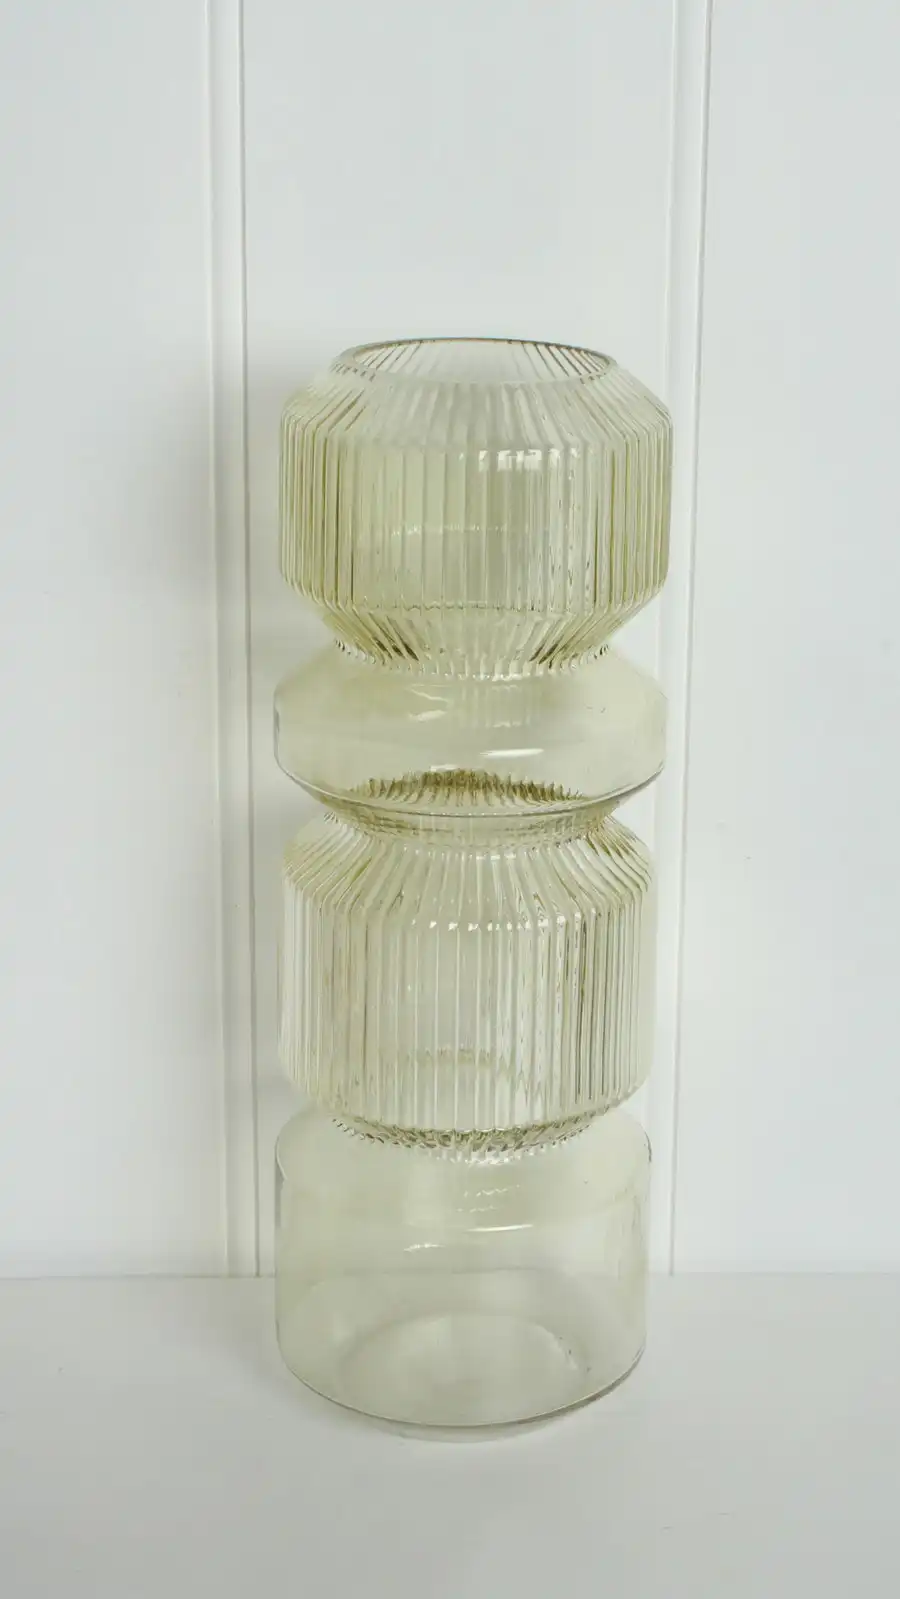 Maine & Crawford 35x13cm Bibo Ribbed Glass Cylinder Vase Home/Garden Display